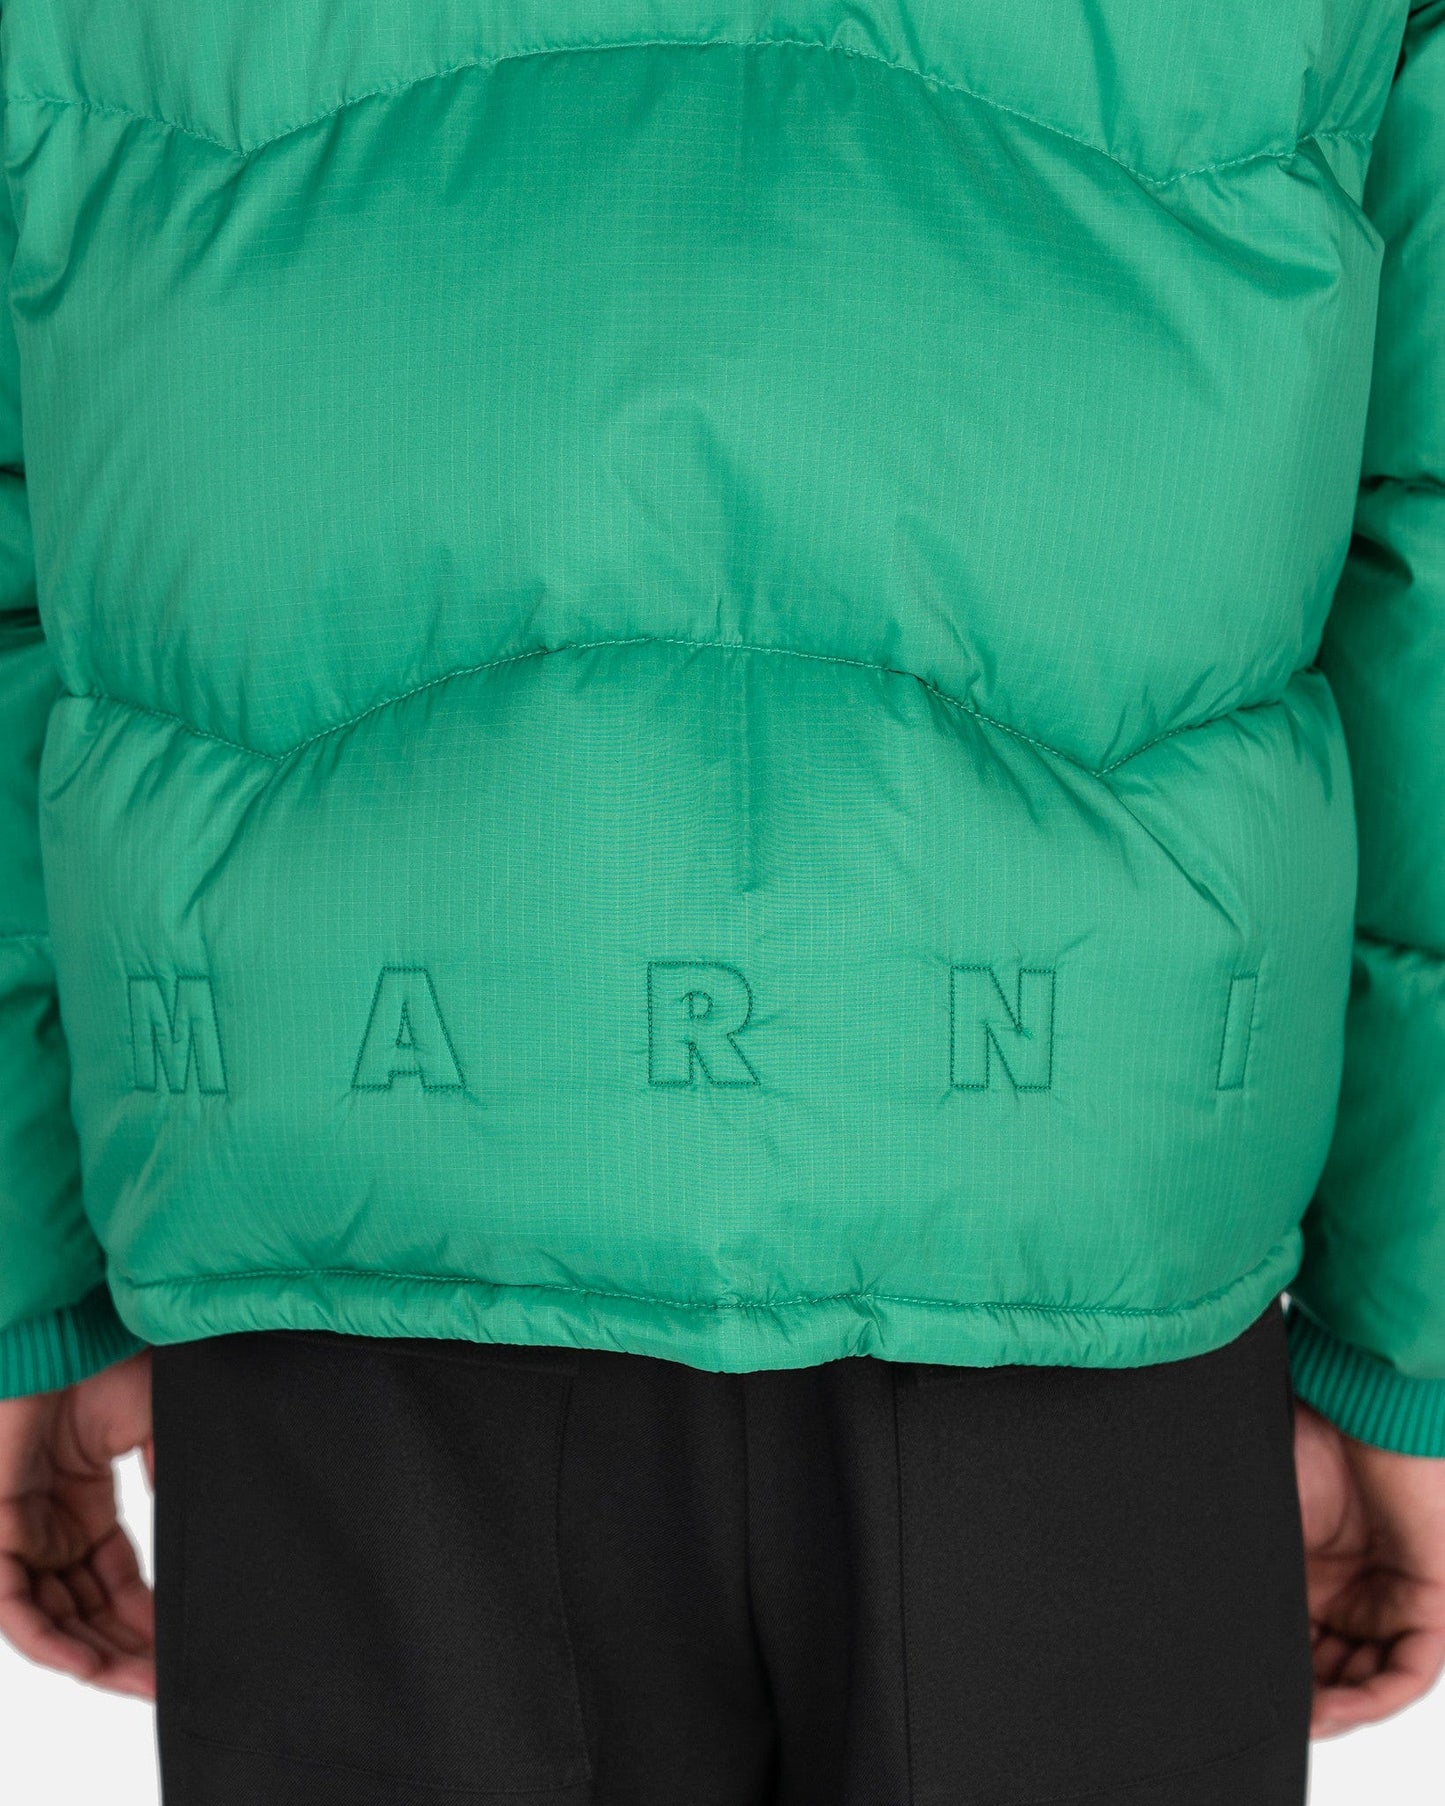 Marni Men's Jackets Ripstop Nylon Western Puffer in Stone Green